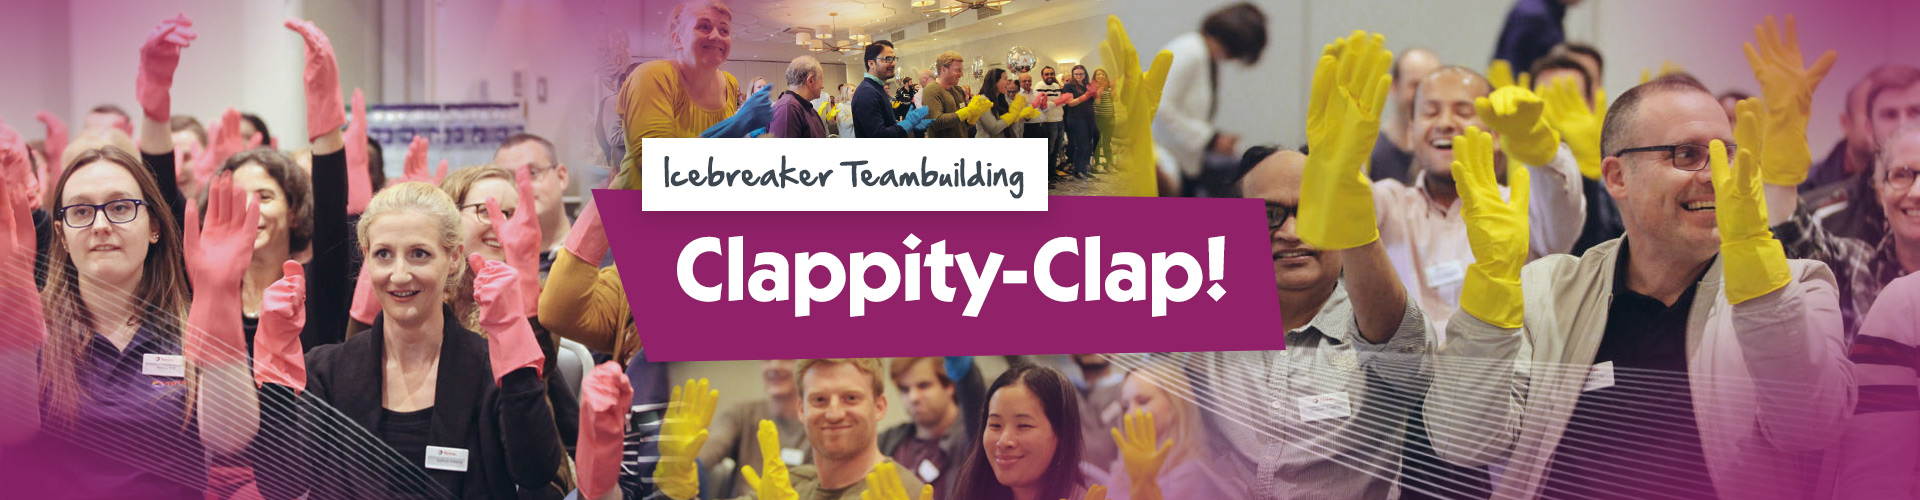 Teambuilding | Clappity-Clap!